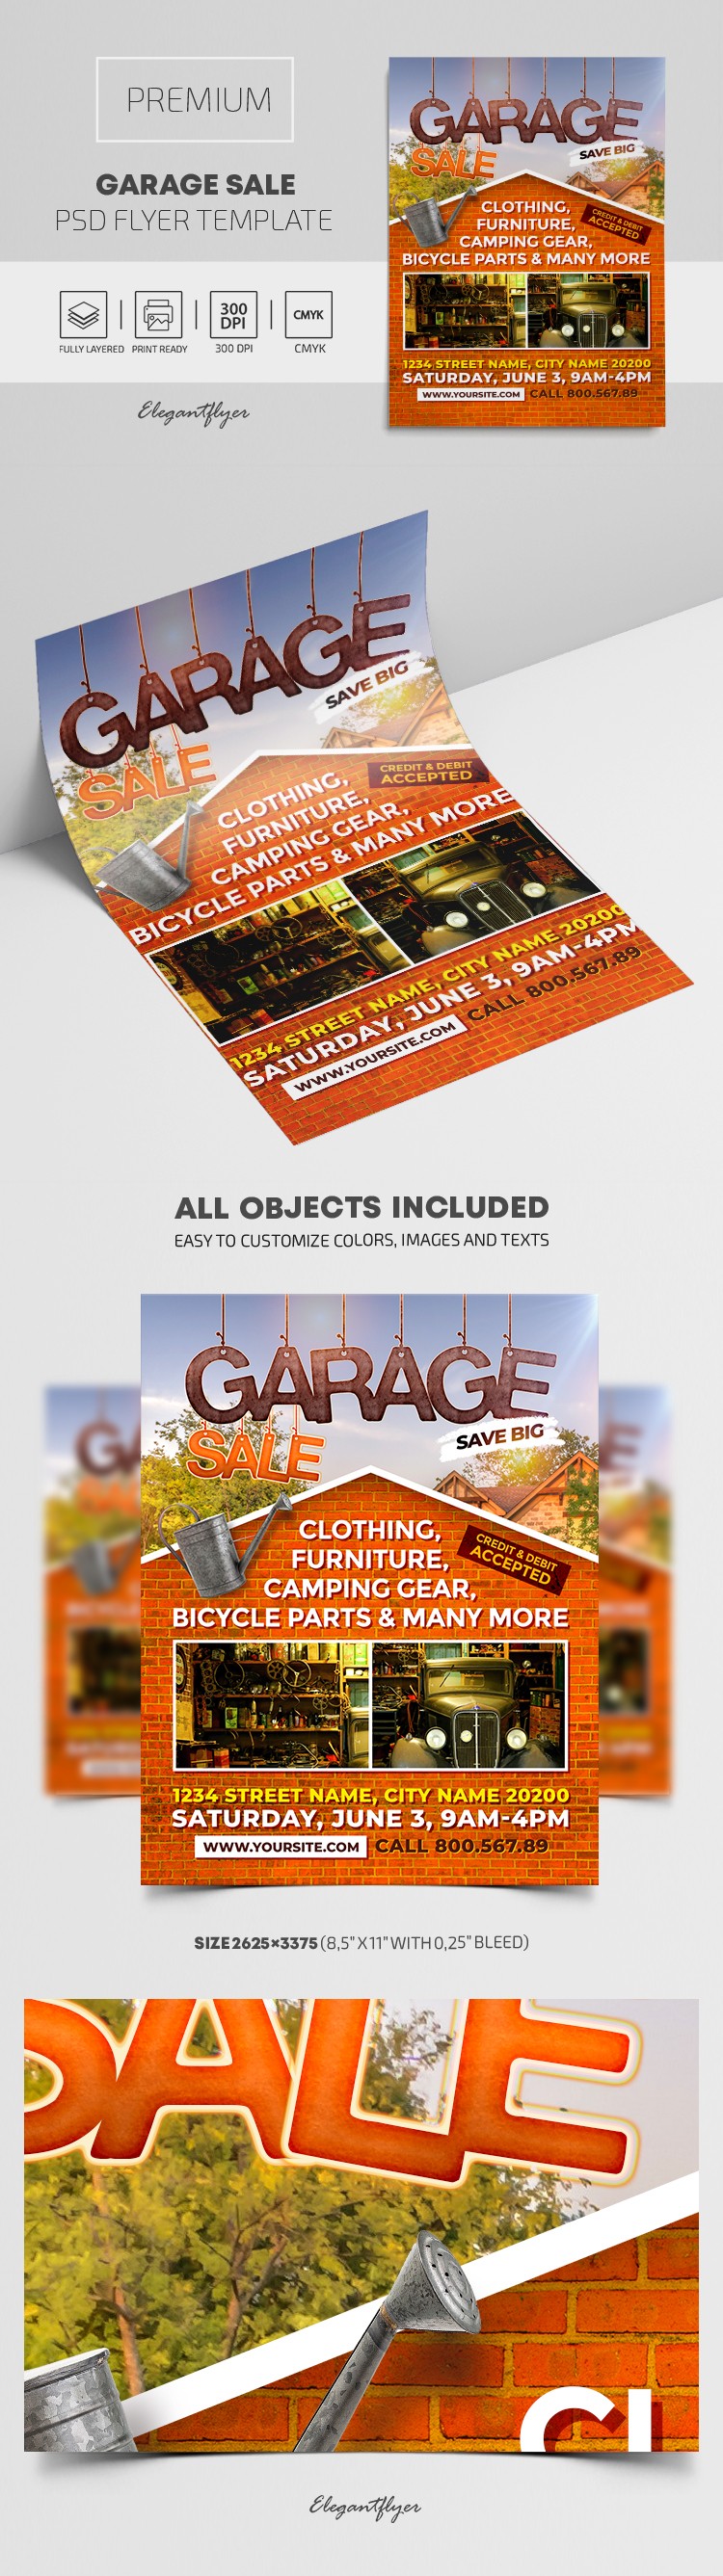 Garage Sale Flyer by ElegantFlyer